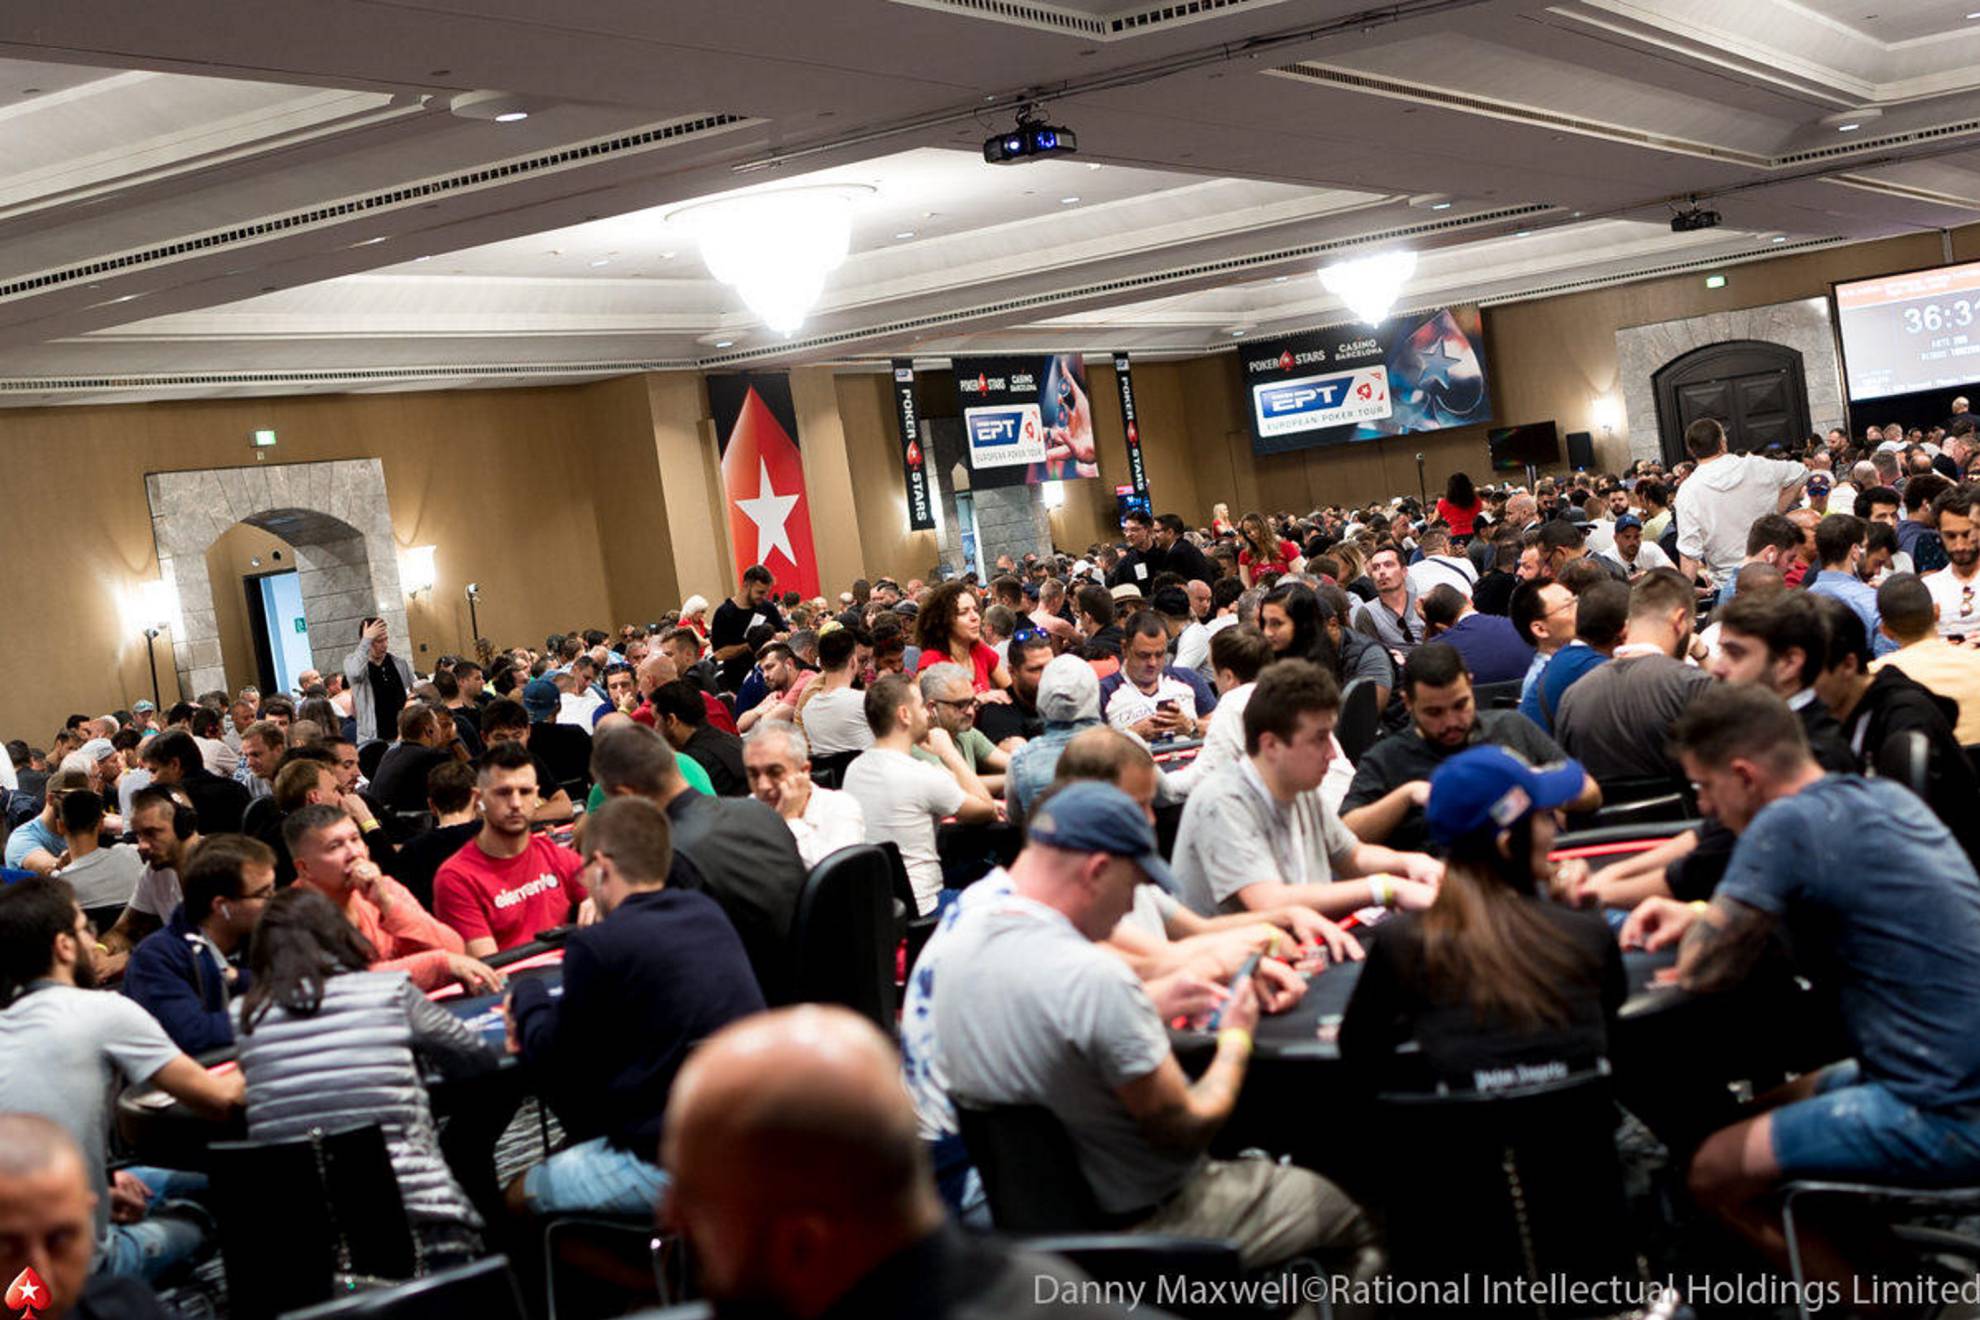 full house poker club